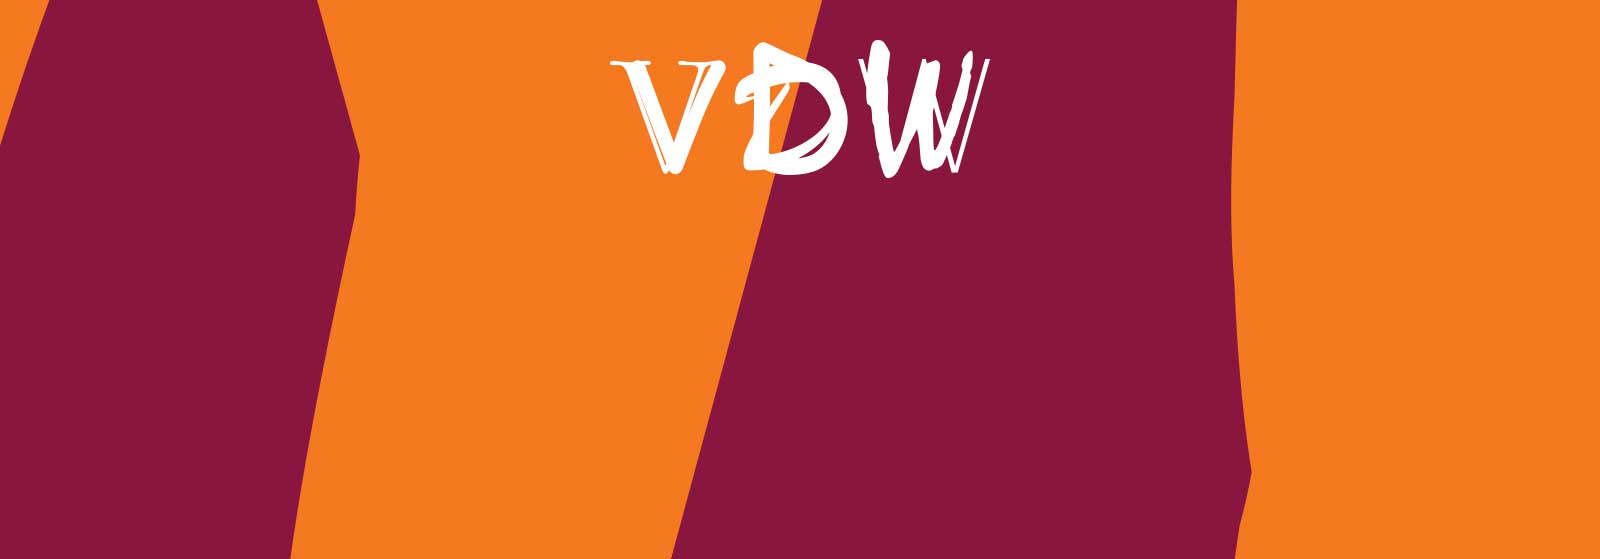 VDW_header2